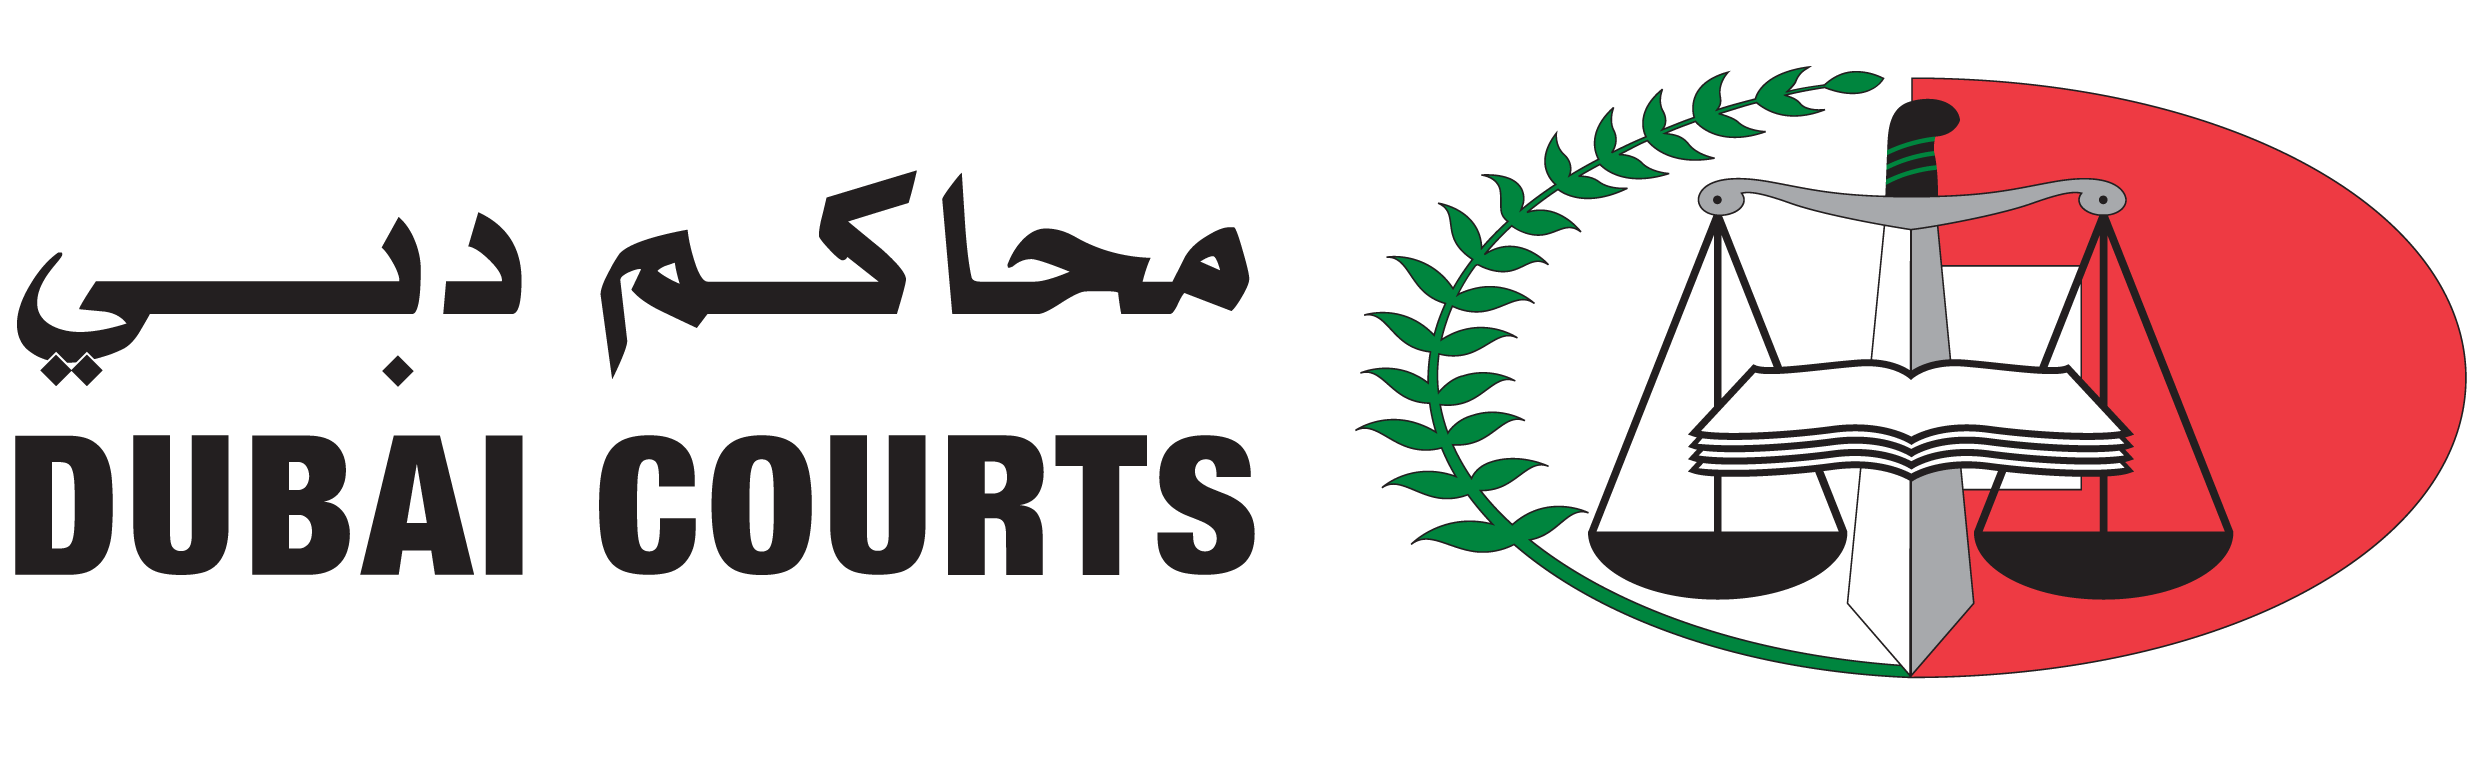 DubaI Courts